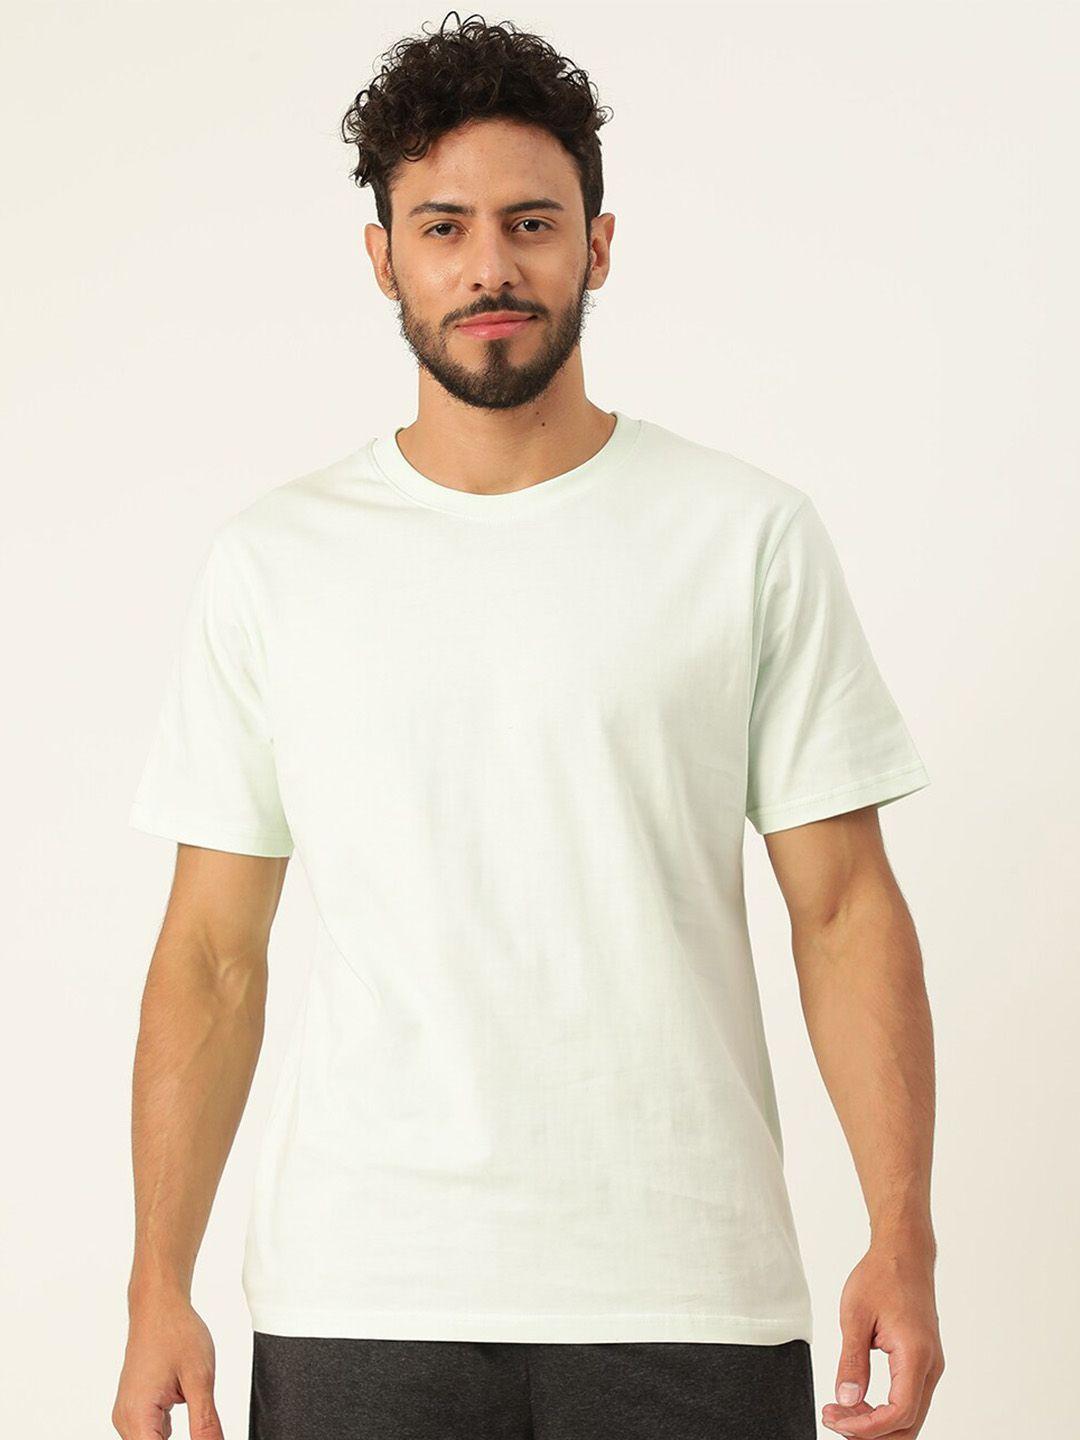 javinishka brand logo printed pure cotton bio finish regular t-shirt